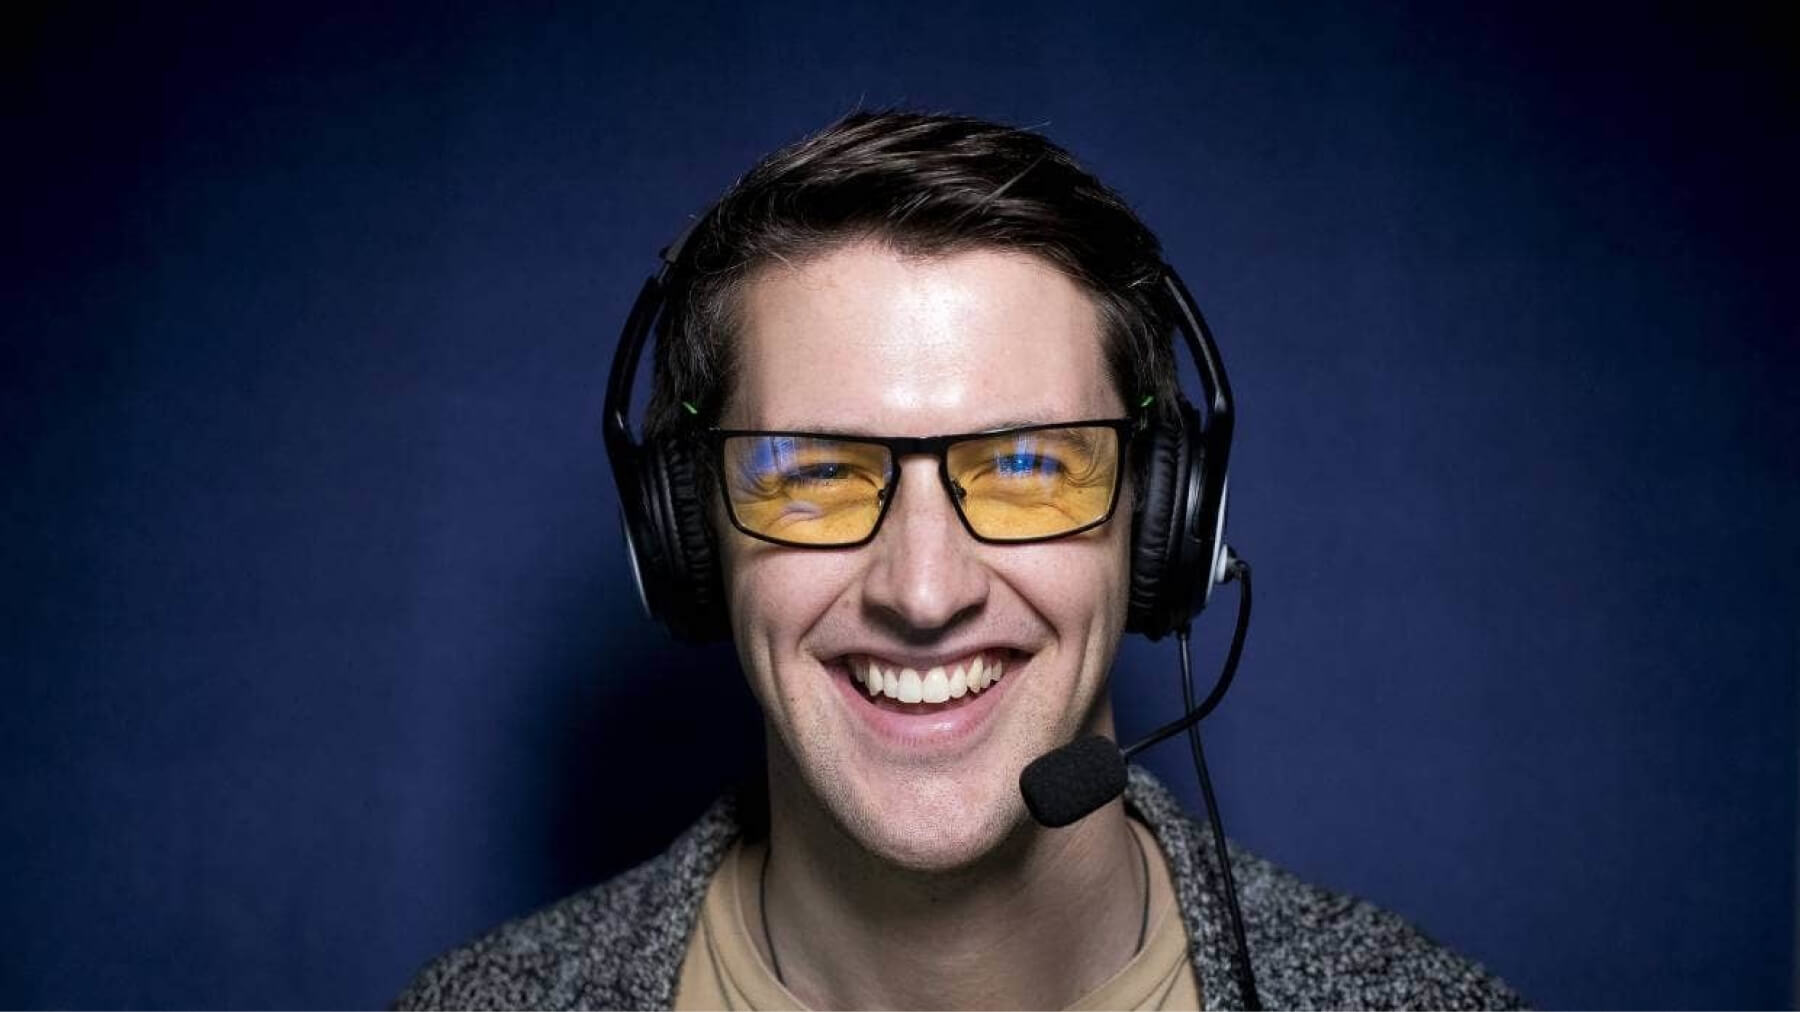 man wearing headphones with glasses